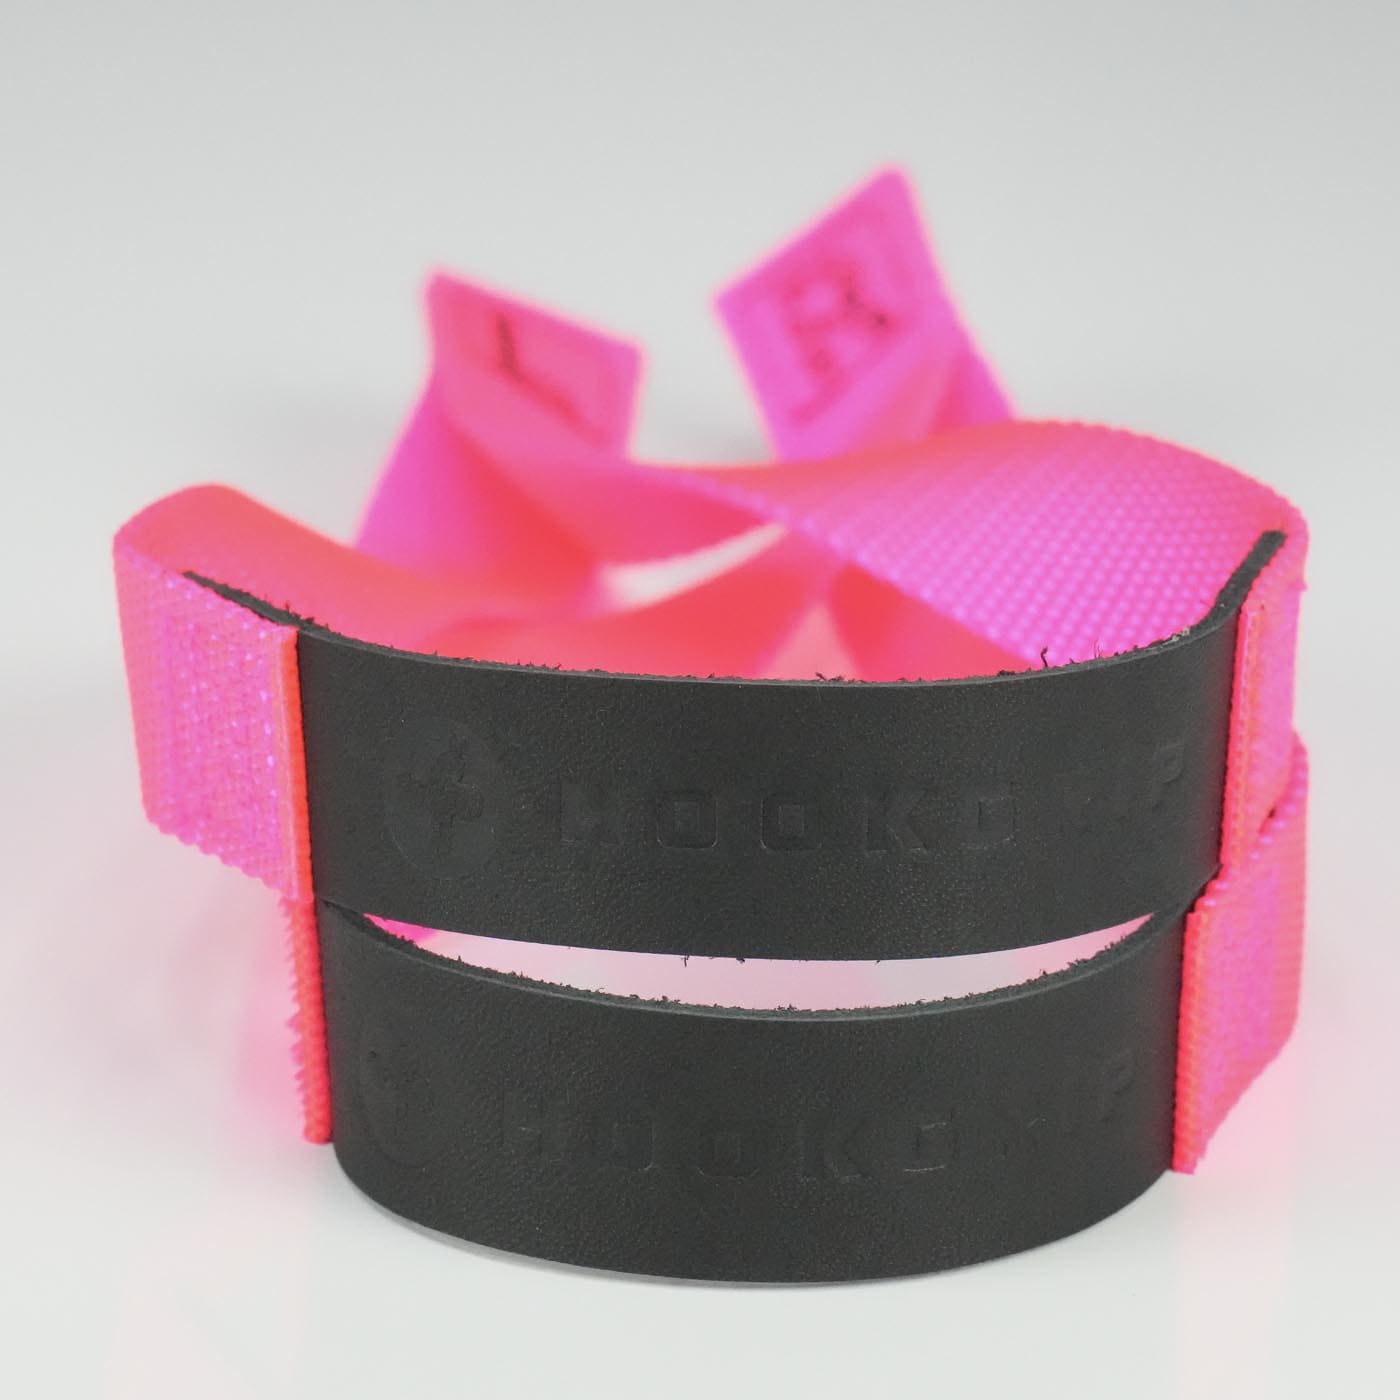 Leather/Nylon Black & Neon Pink hookgrip weightlifting straps